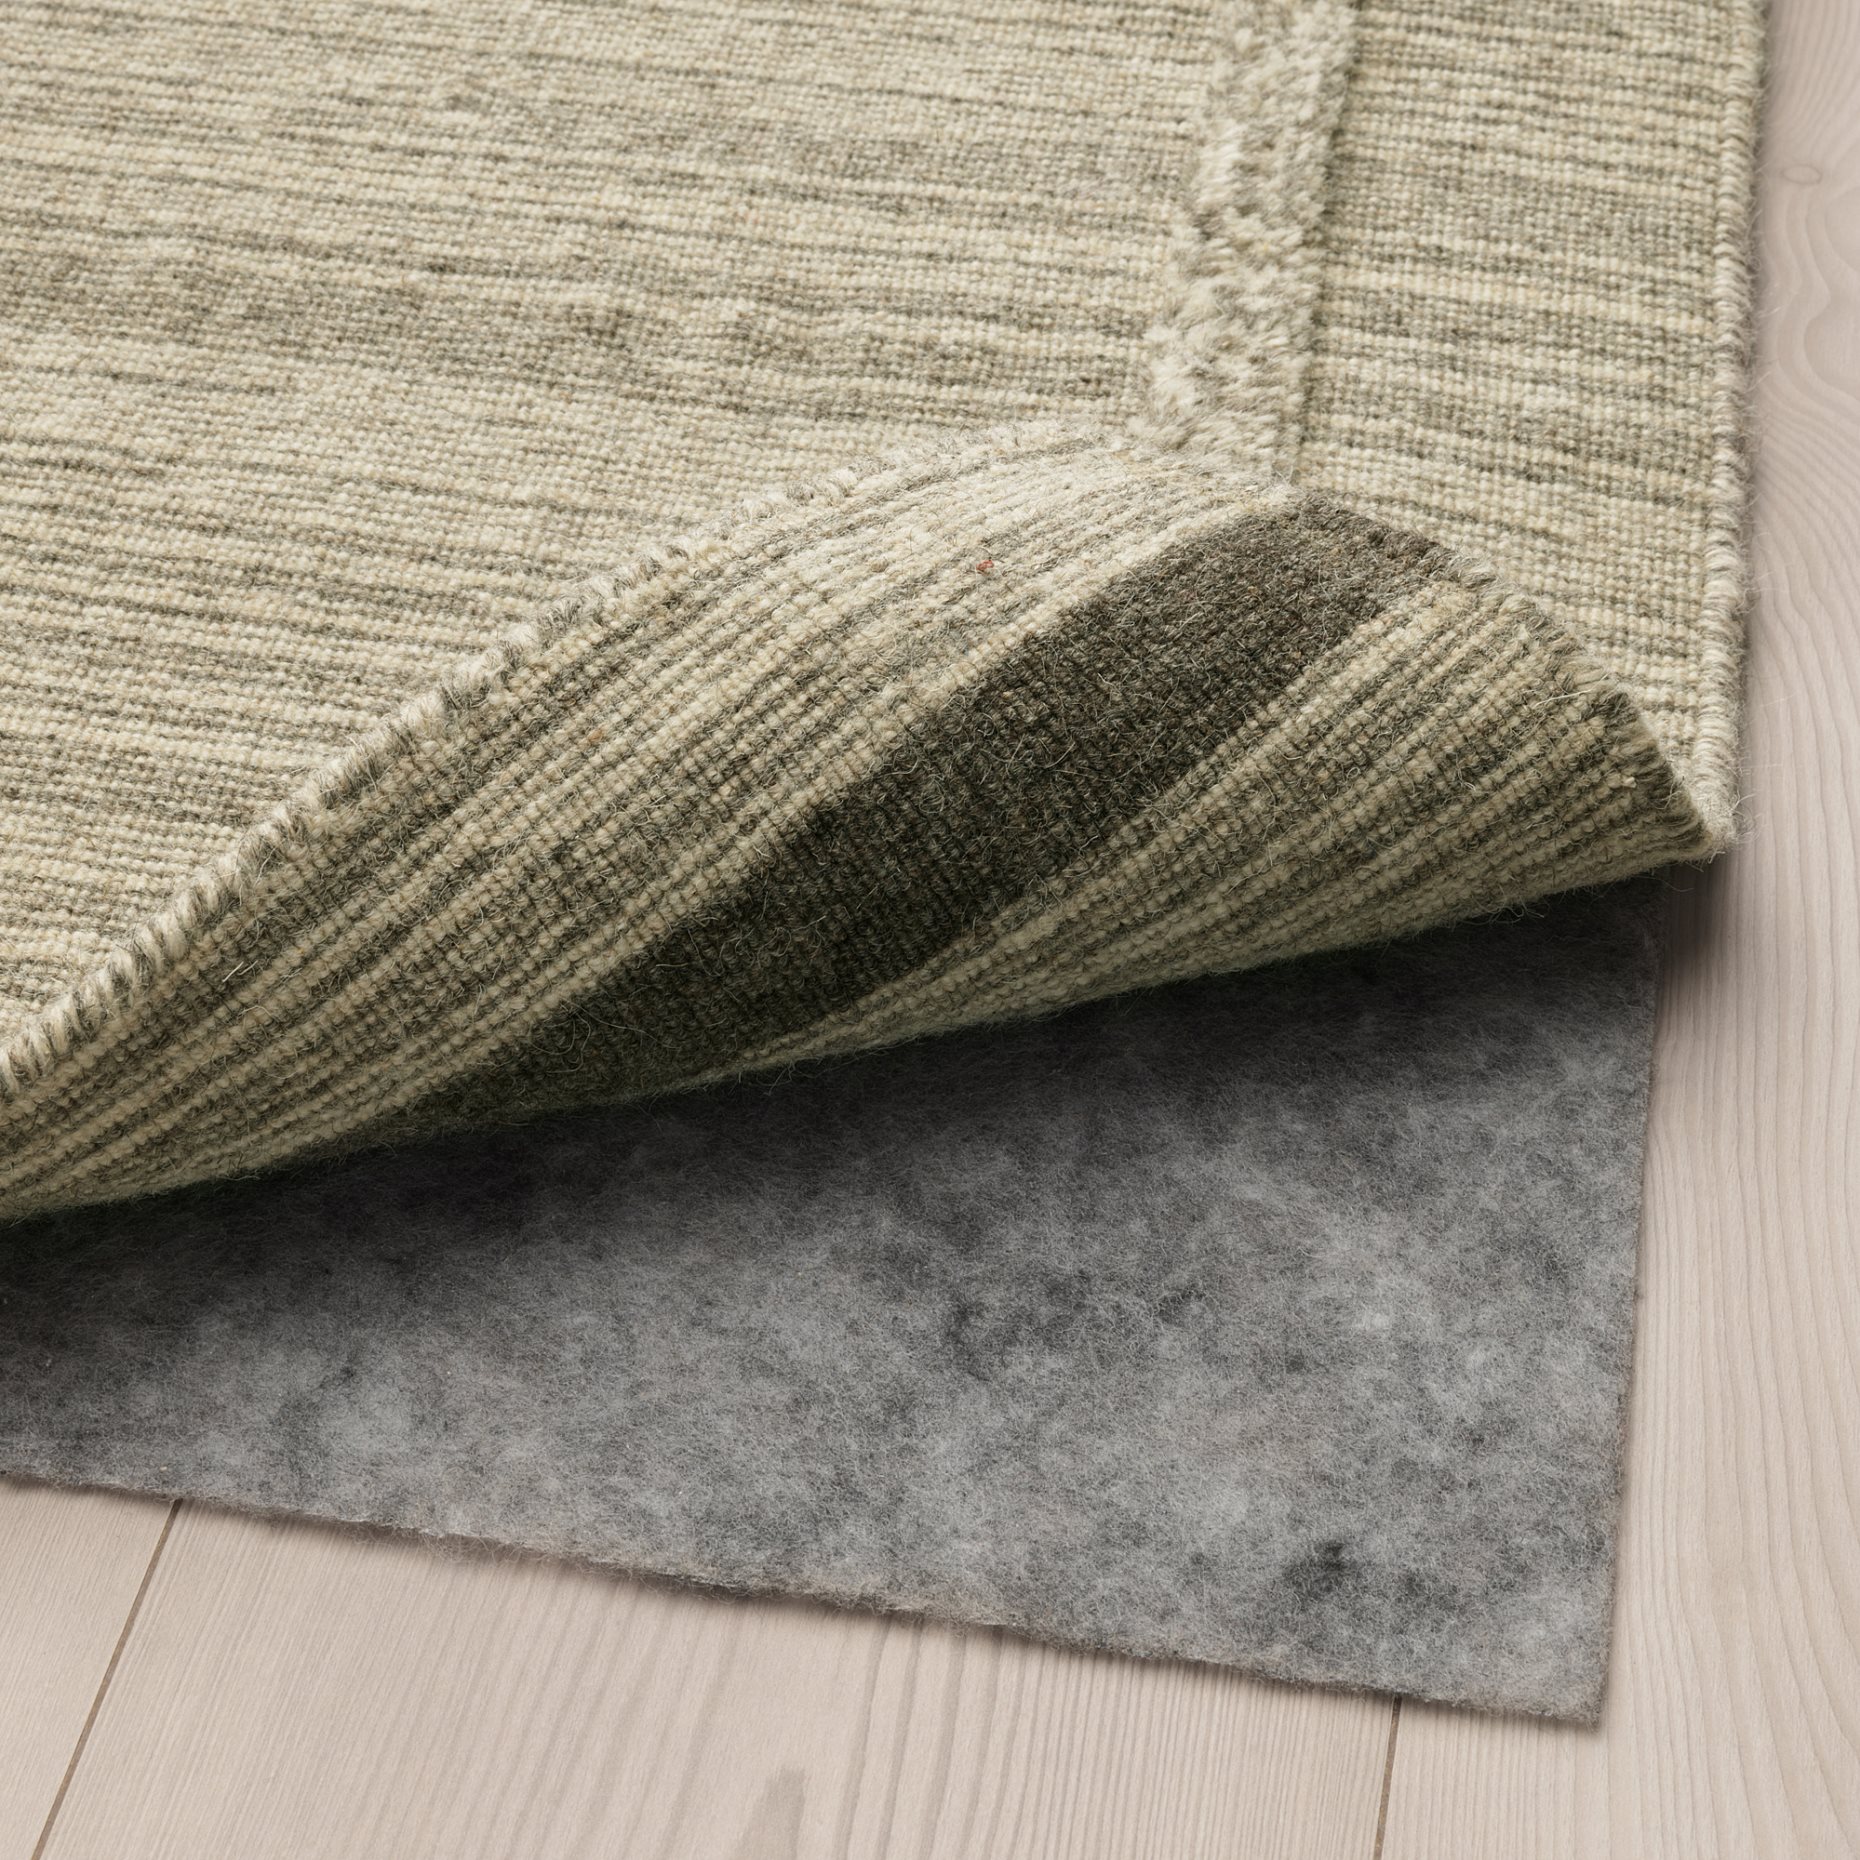 STOPP, rug underlay with anti-slip, 190x280 cm, 205.502.04